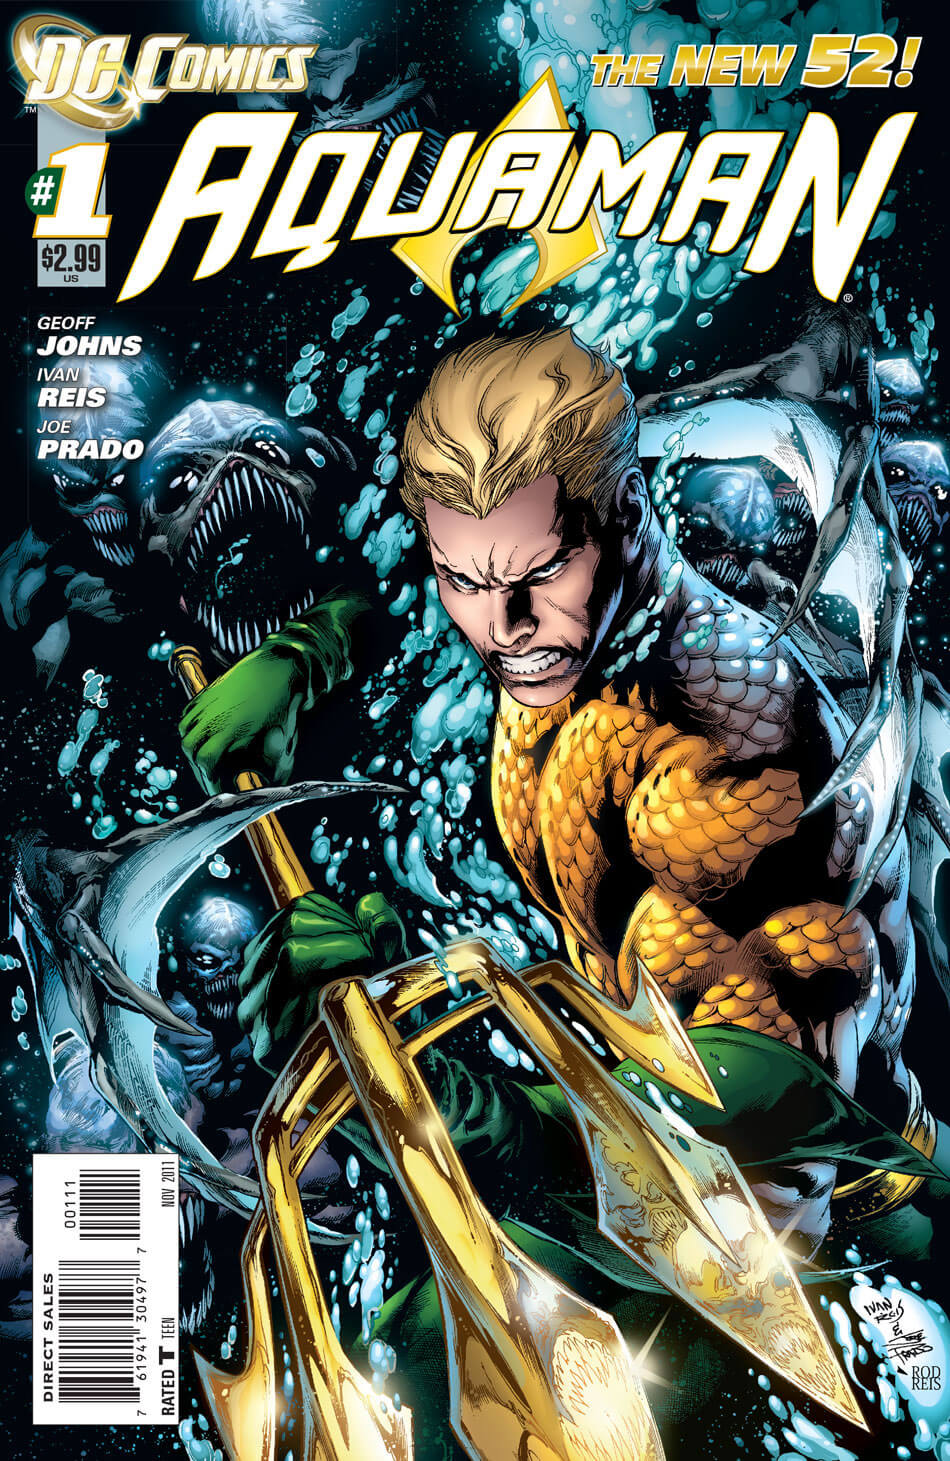 Aquaman-#1-cover-by-Ivan-Reis,-Joe-Prado-and-Rod-Reis